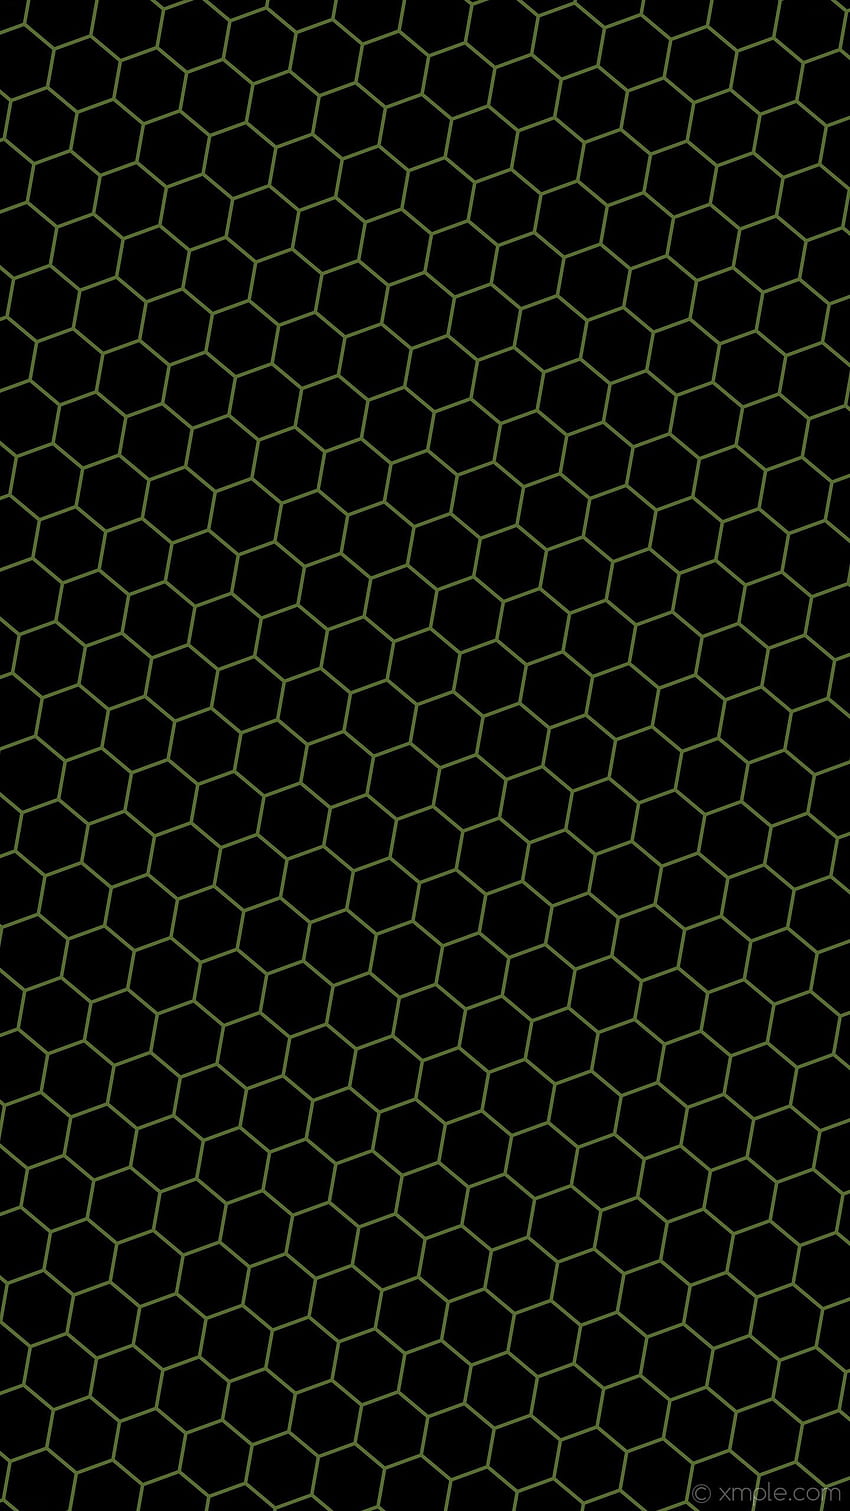 Free Honeycomb Wallpaper 25829 1920x1408px